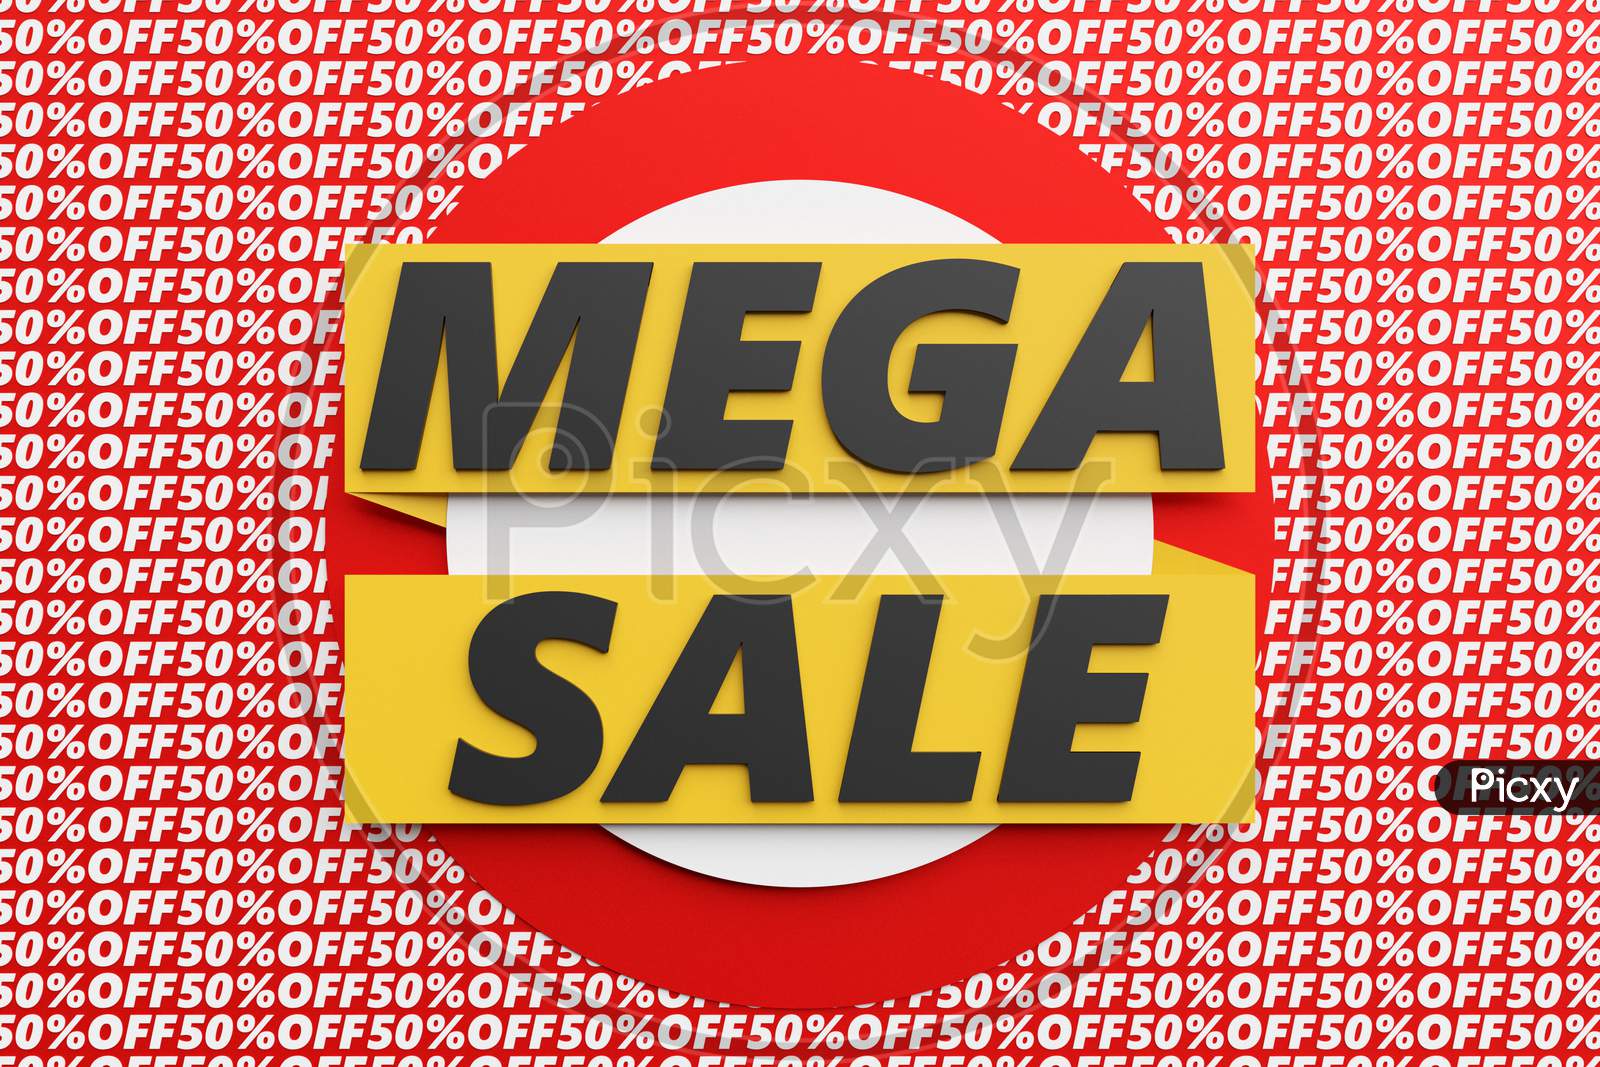 3D Illustration Of A Sale Tag. Special Offer, Big Sale, Discount, Best Price, Mega Sale Banner. Shop Or Online Shopping. Sticker, Badge Coupon Store